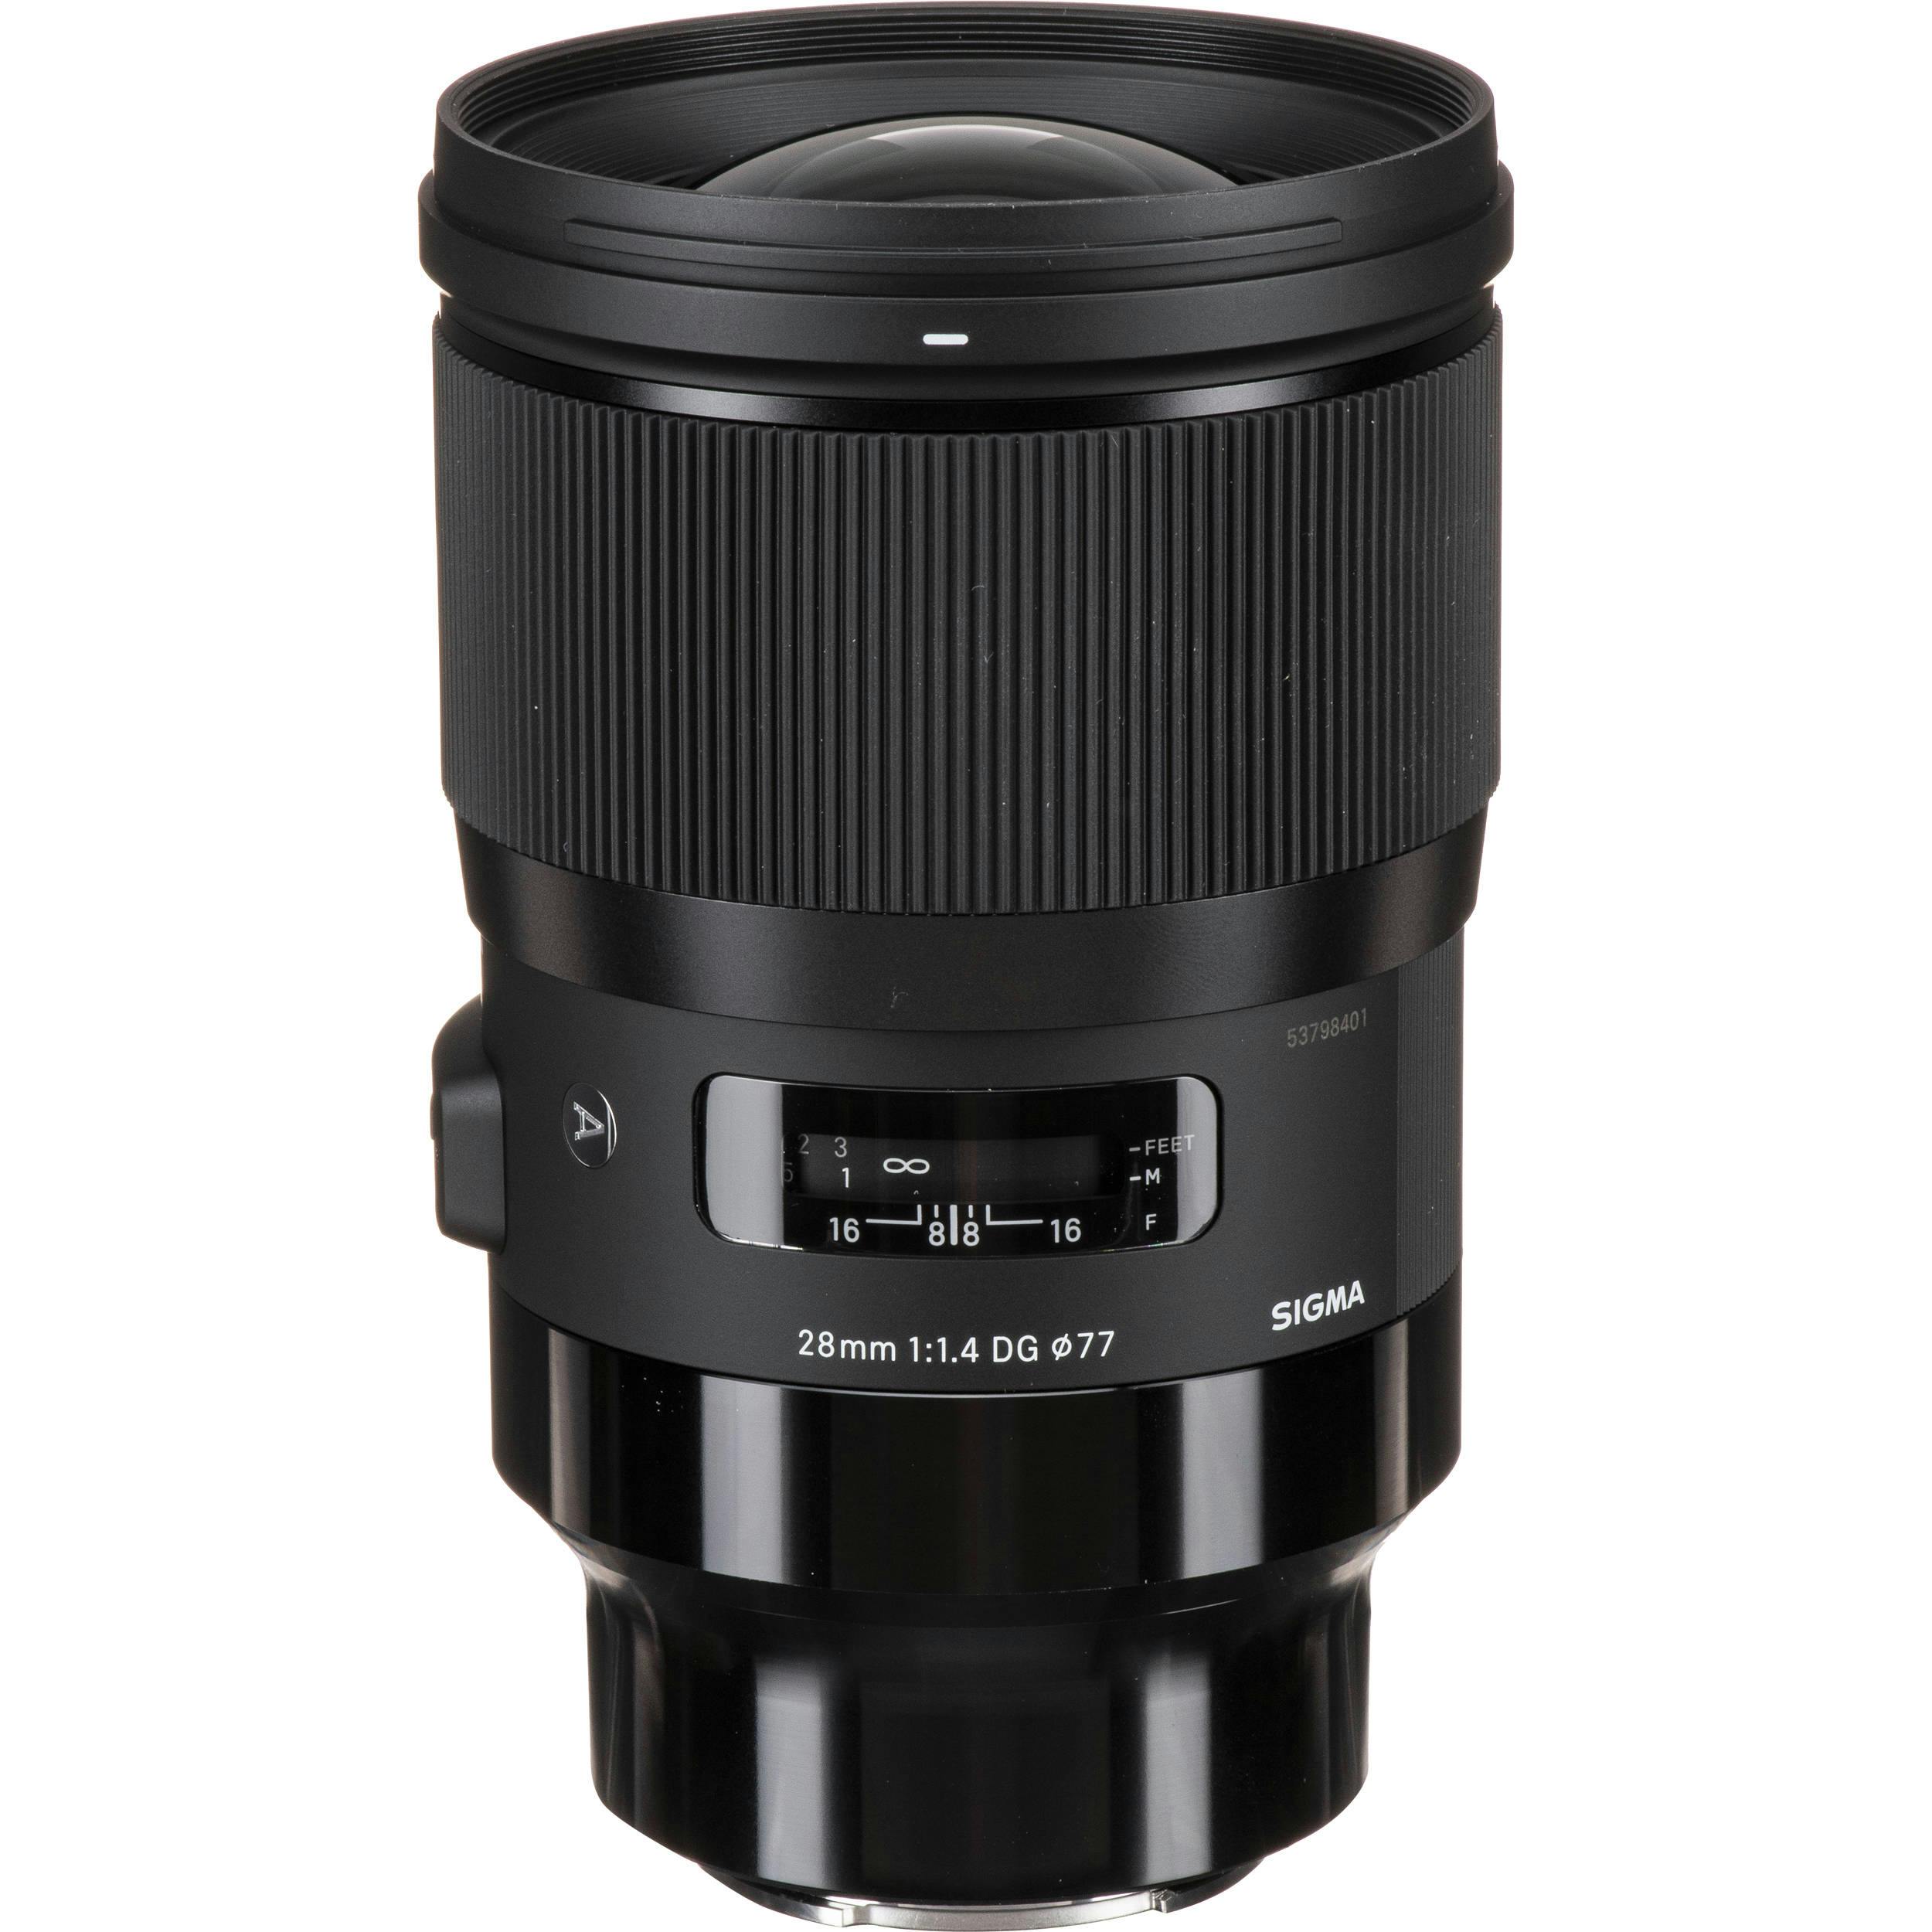 Sony Sigma Lens 28mm F1.4 DG HSM Art